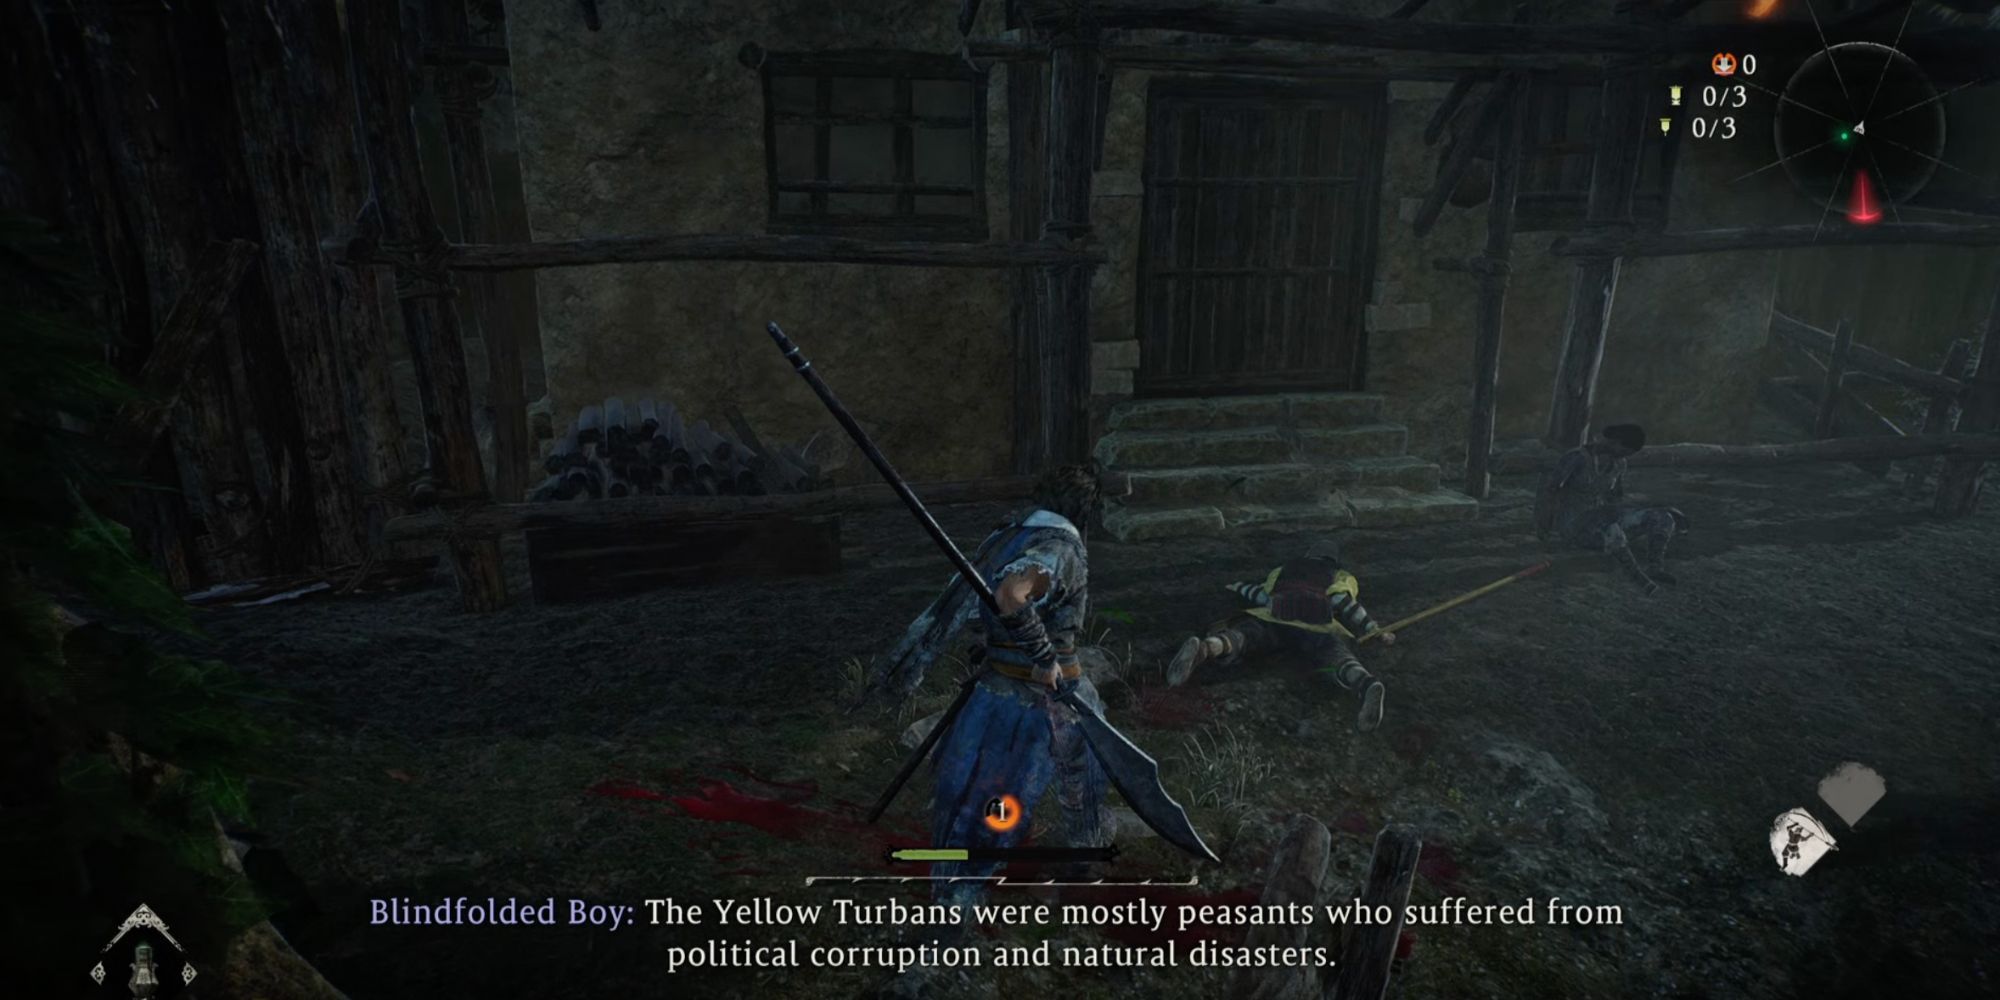 Wo Long Fallen Dynasty - Using a spear instead of a sword